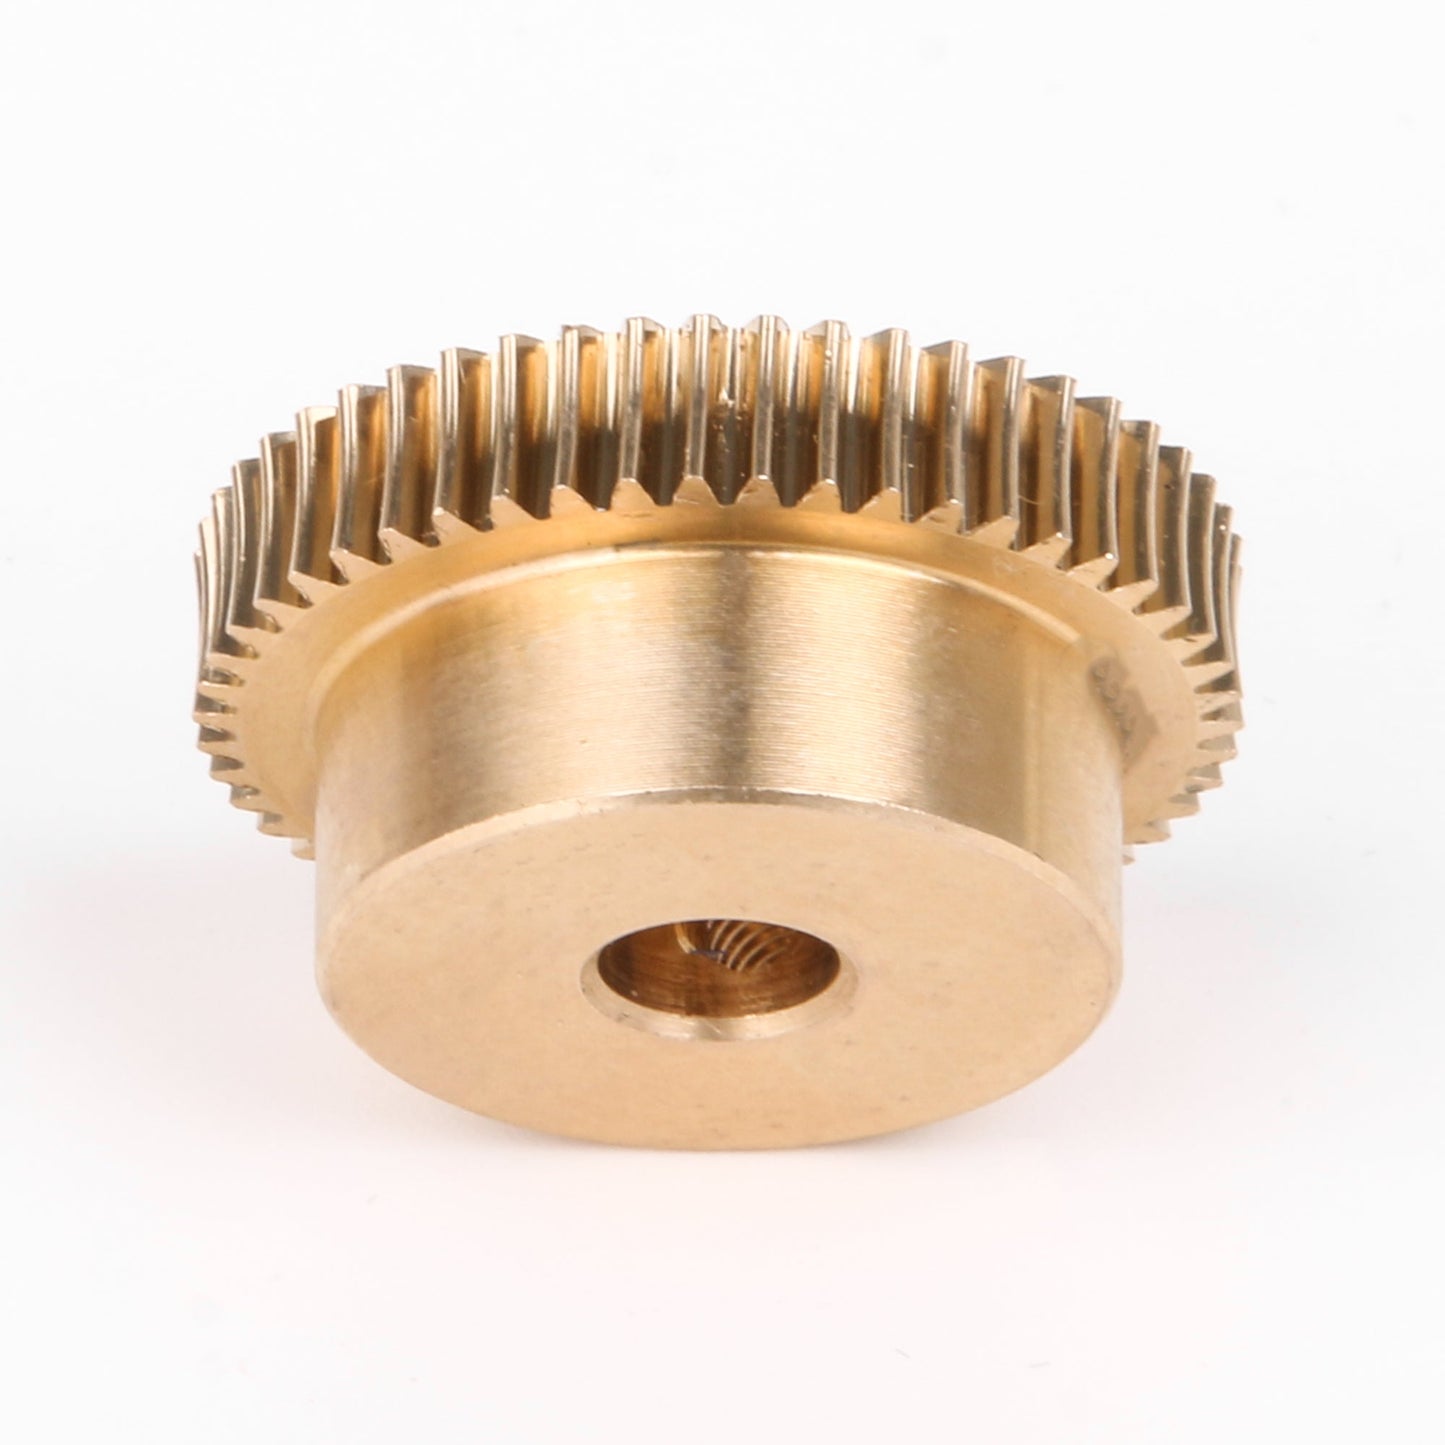 BQLZR 50T 0.5Modulus Brass Gear Wheel 6mm Hole Dia Shaft Kit w/ Screw for Industry